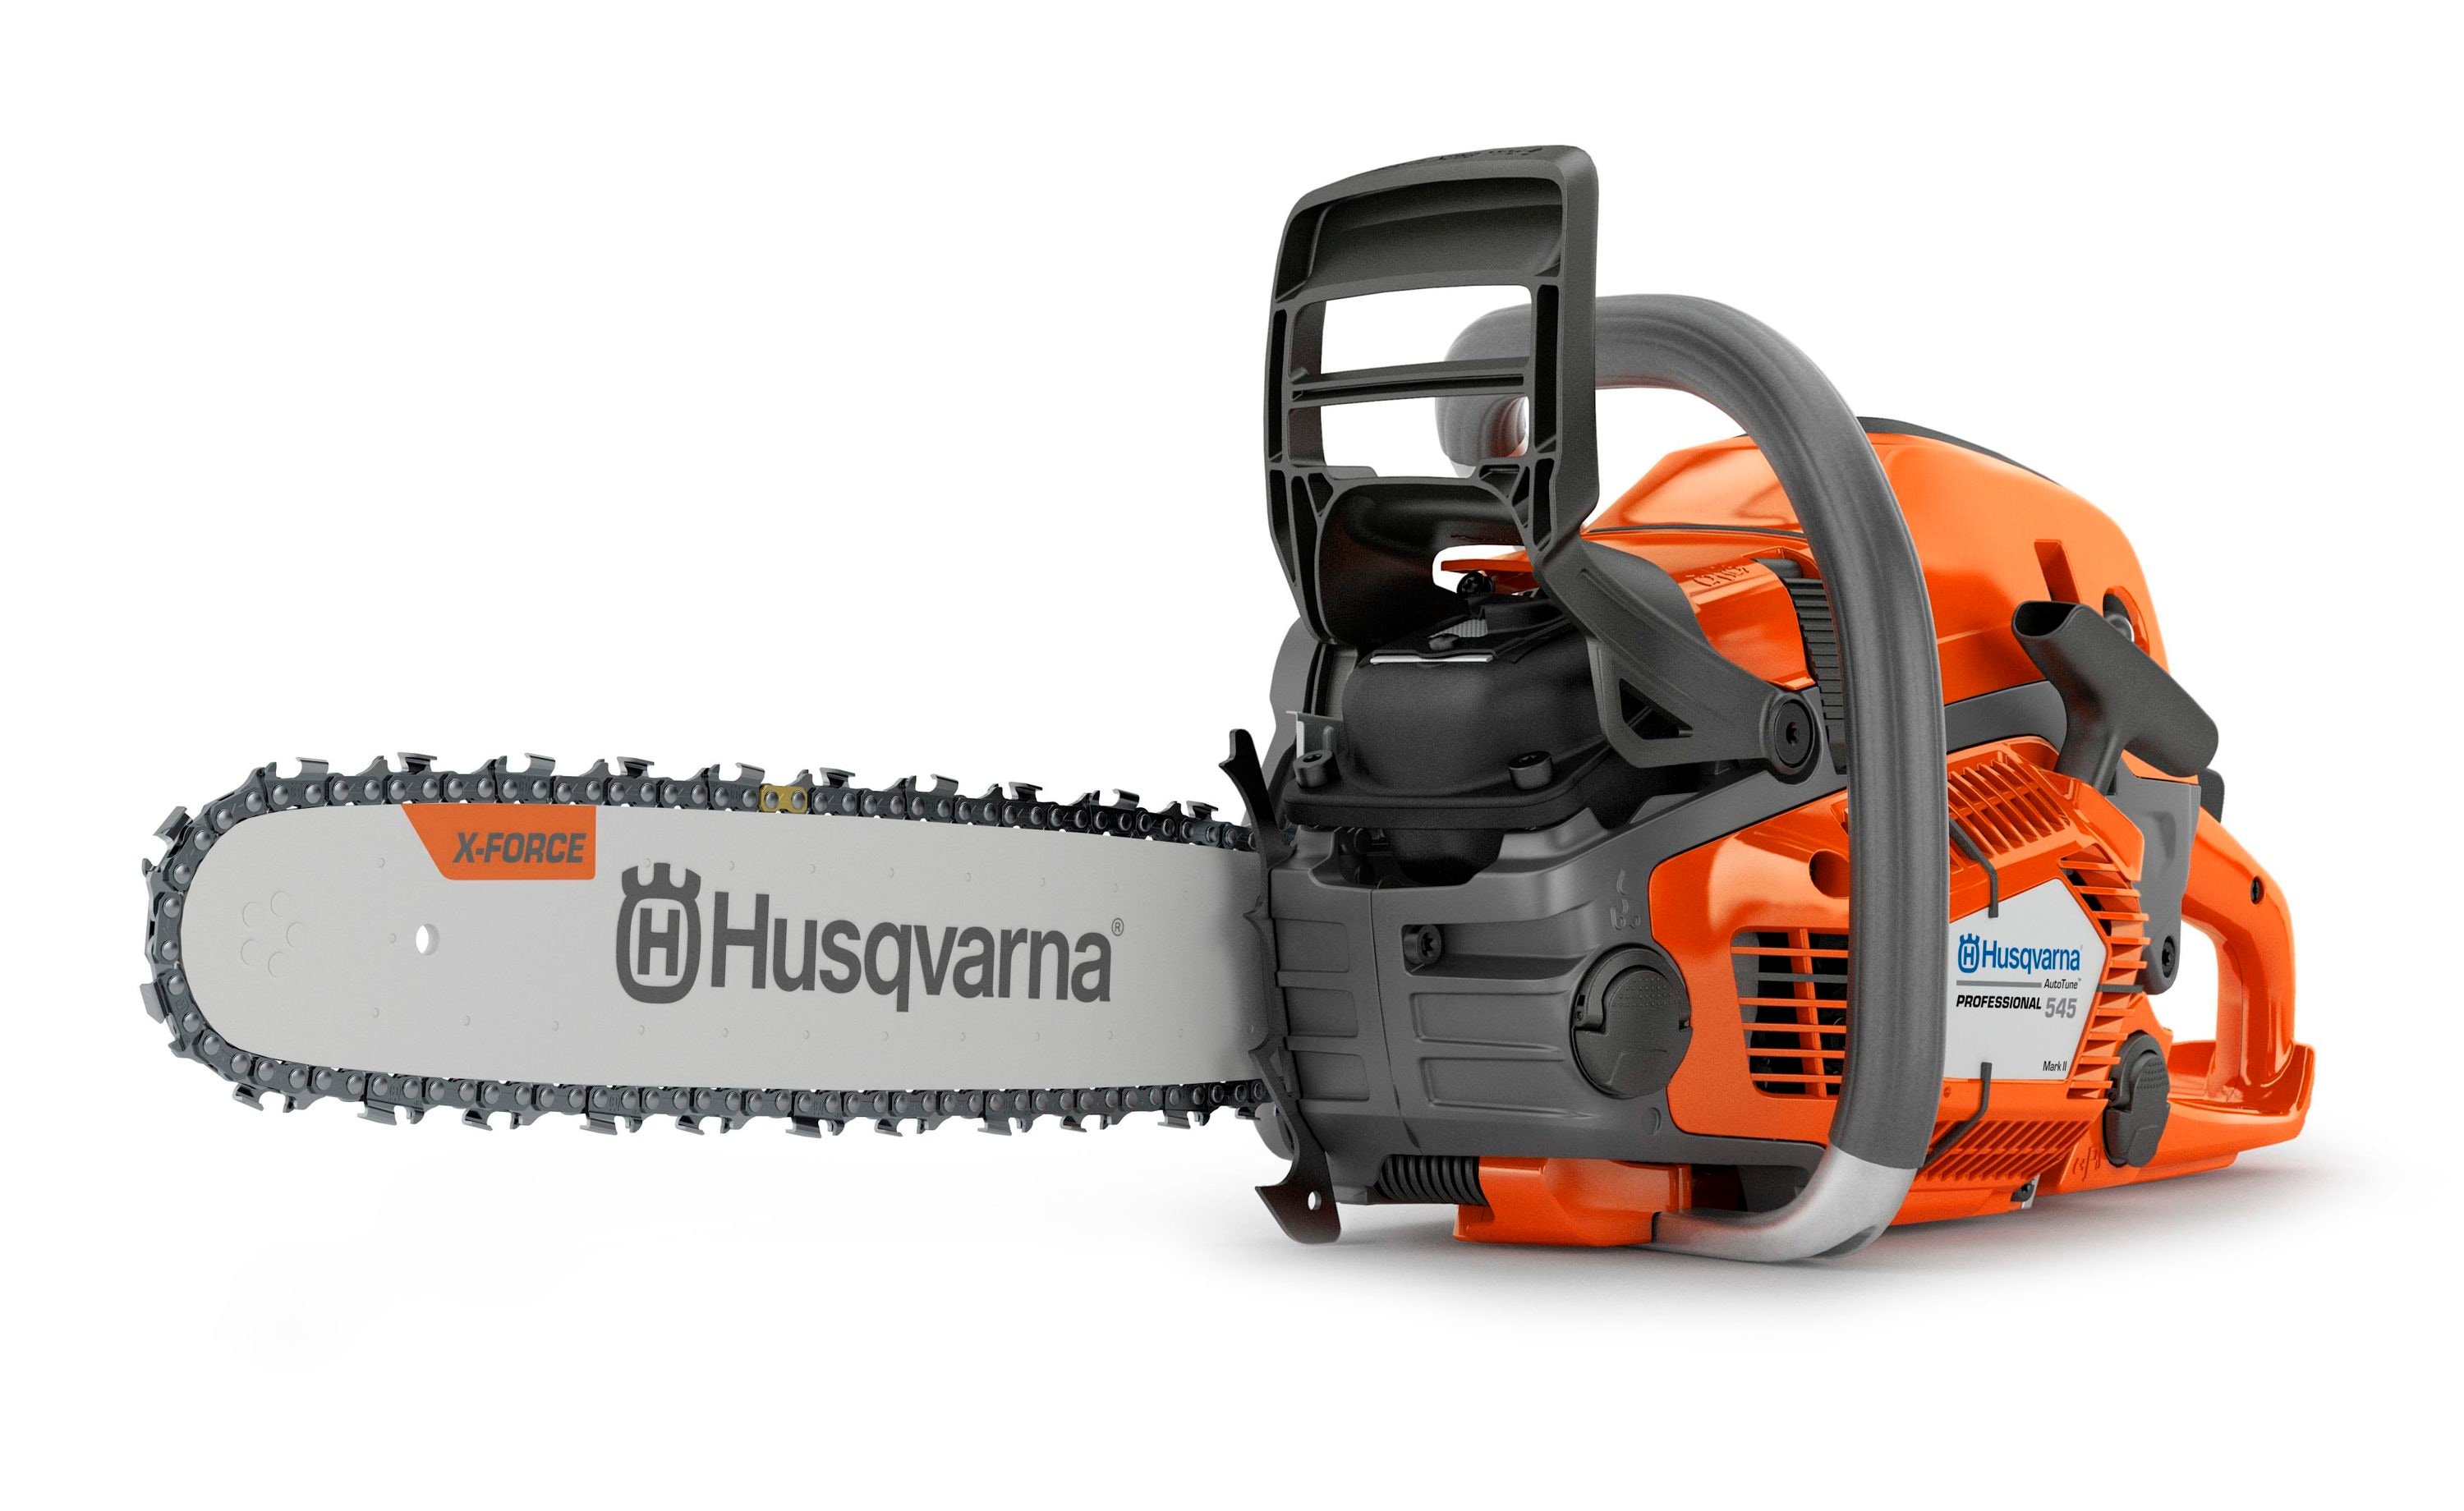 Image of Husqvarna 545 Mark II chainsaw